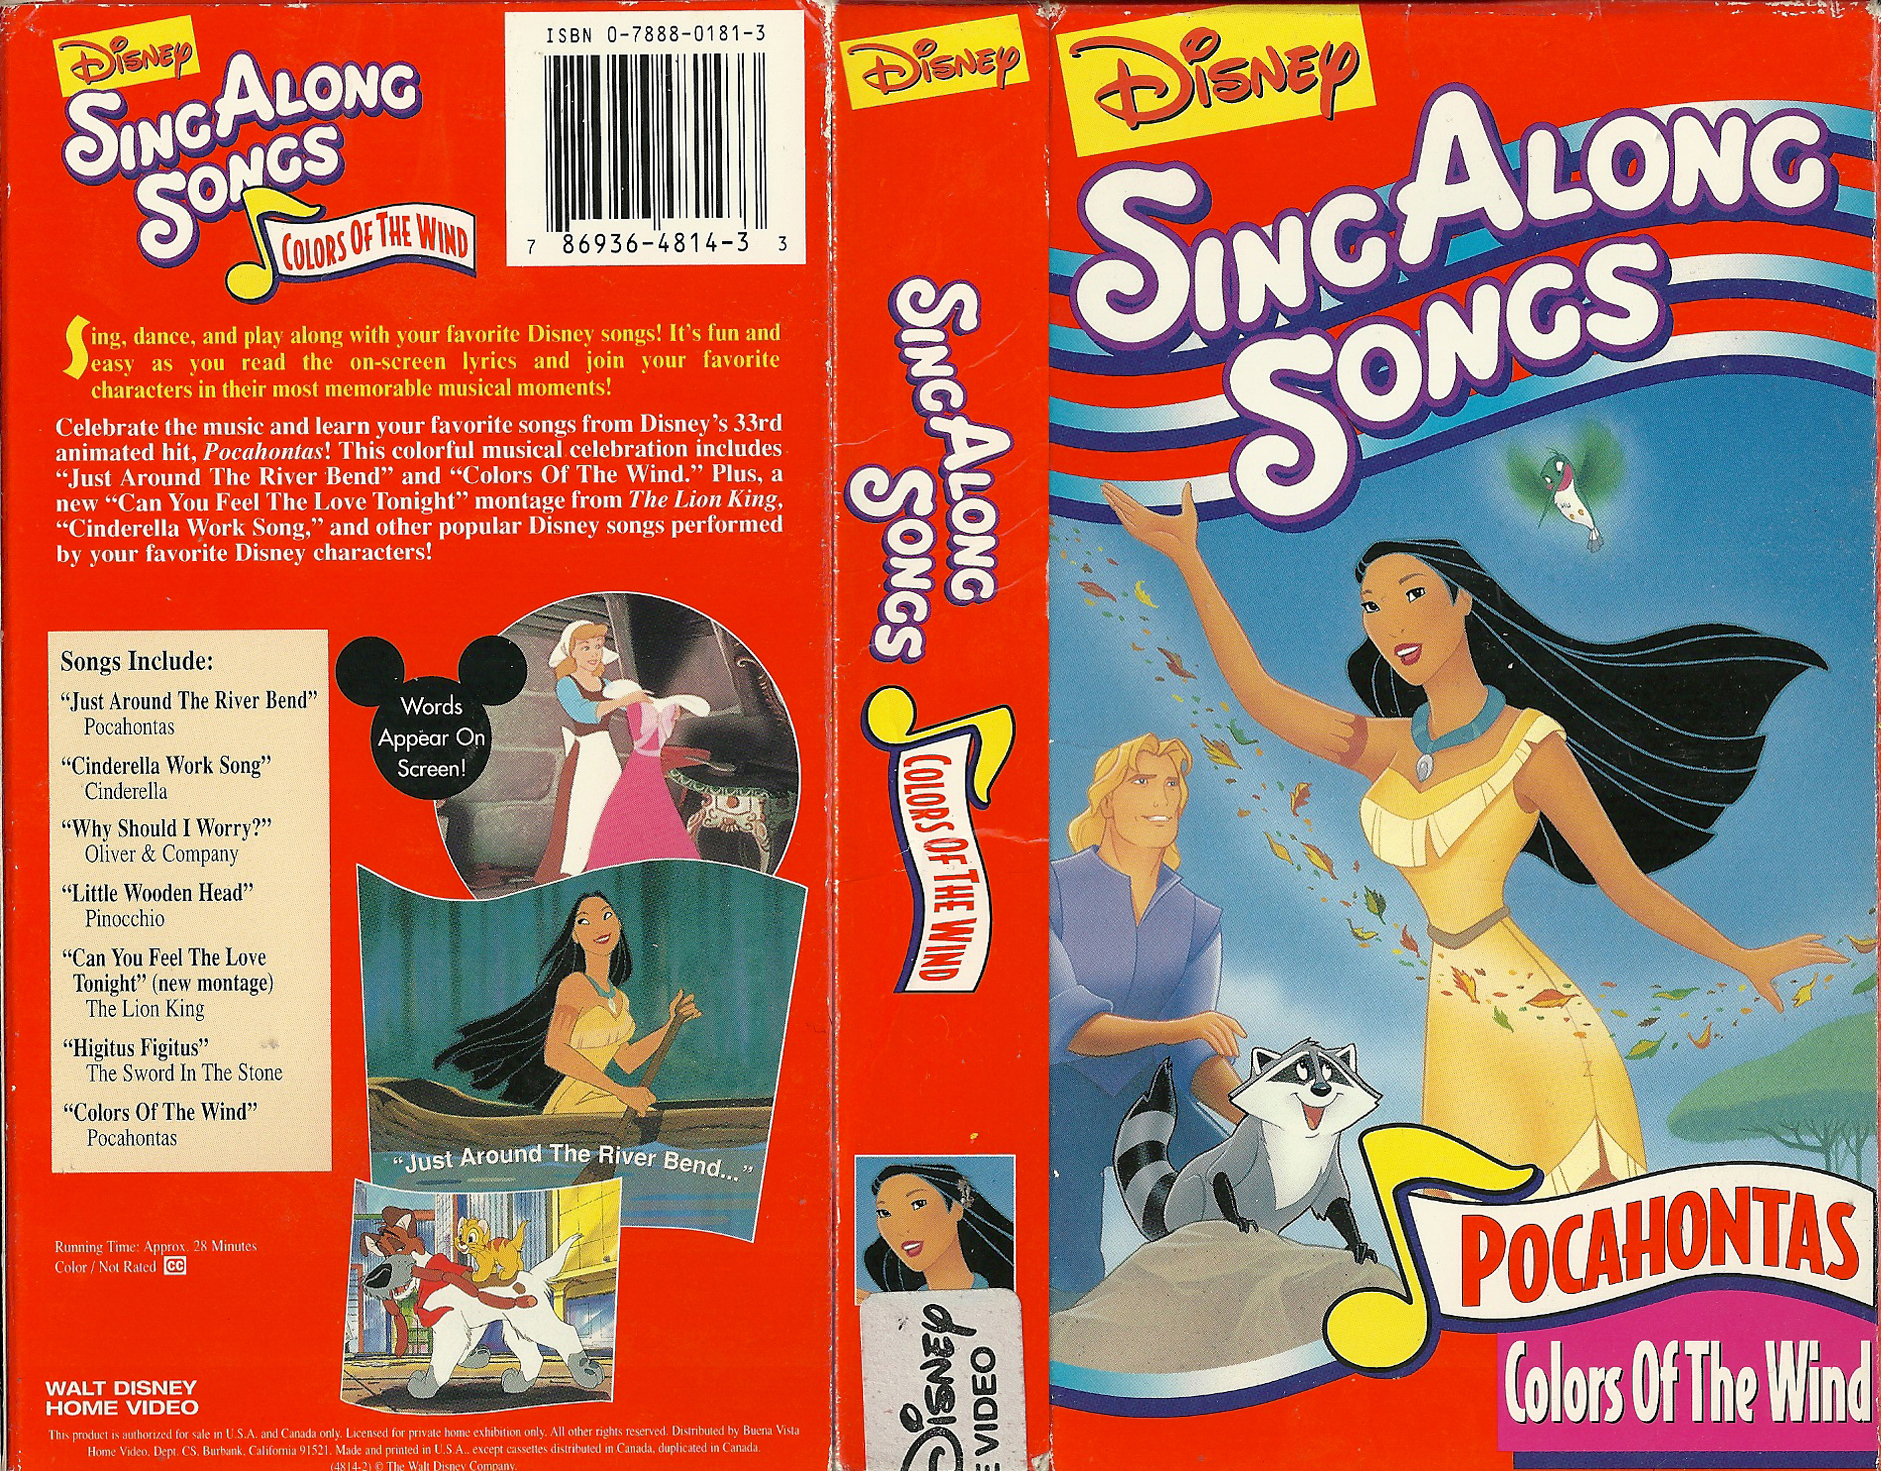 November 25 2011 VHS cover scan - click for high res version disney sing al...